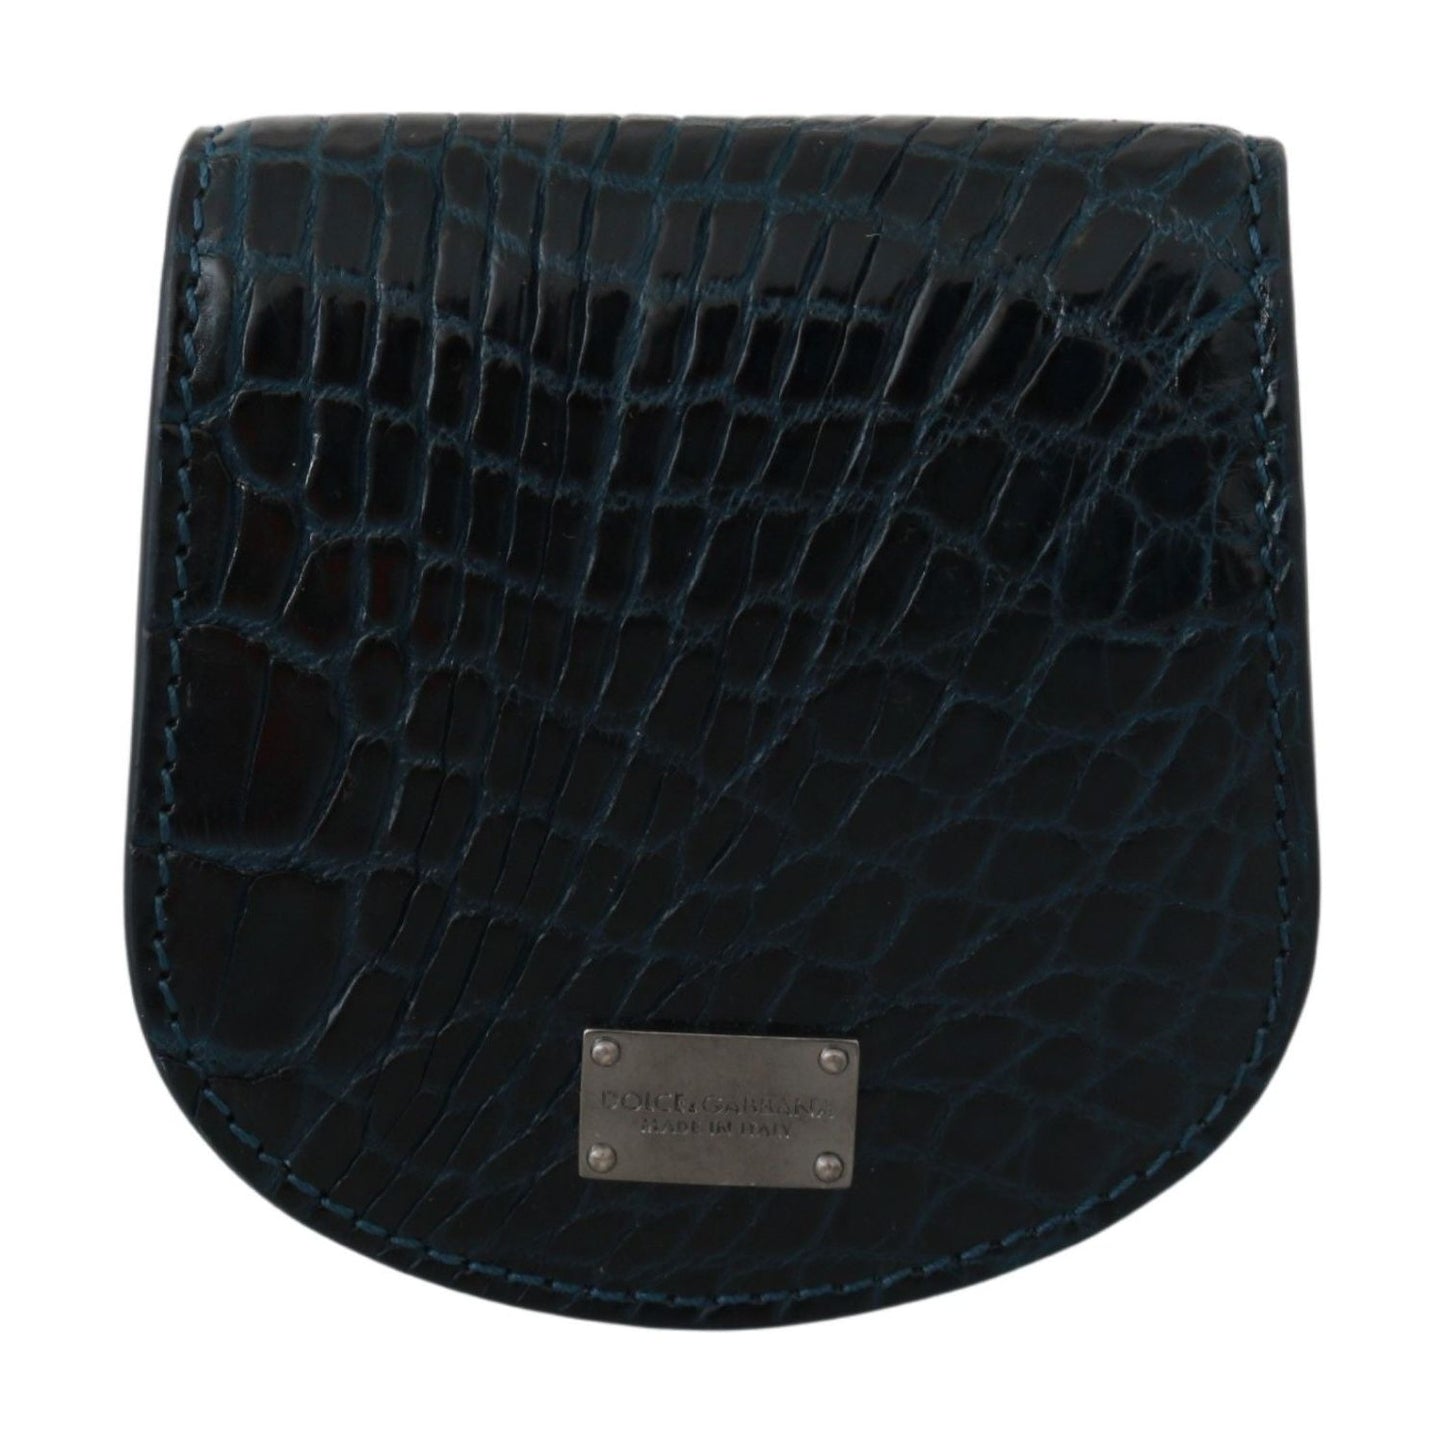 Dolce & Gabbana Exquisite Dark Blue Coin Case Wallet blue-exotic-skins-condom-case-holder-pocket Condom Case IMG_0247-fe9d8d00-afb.jpg